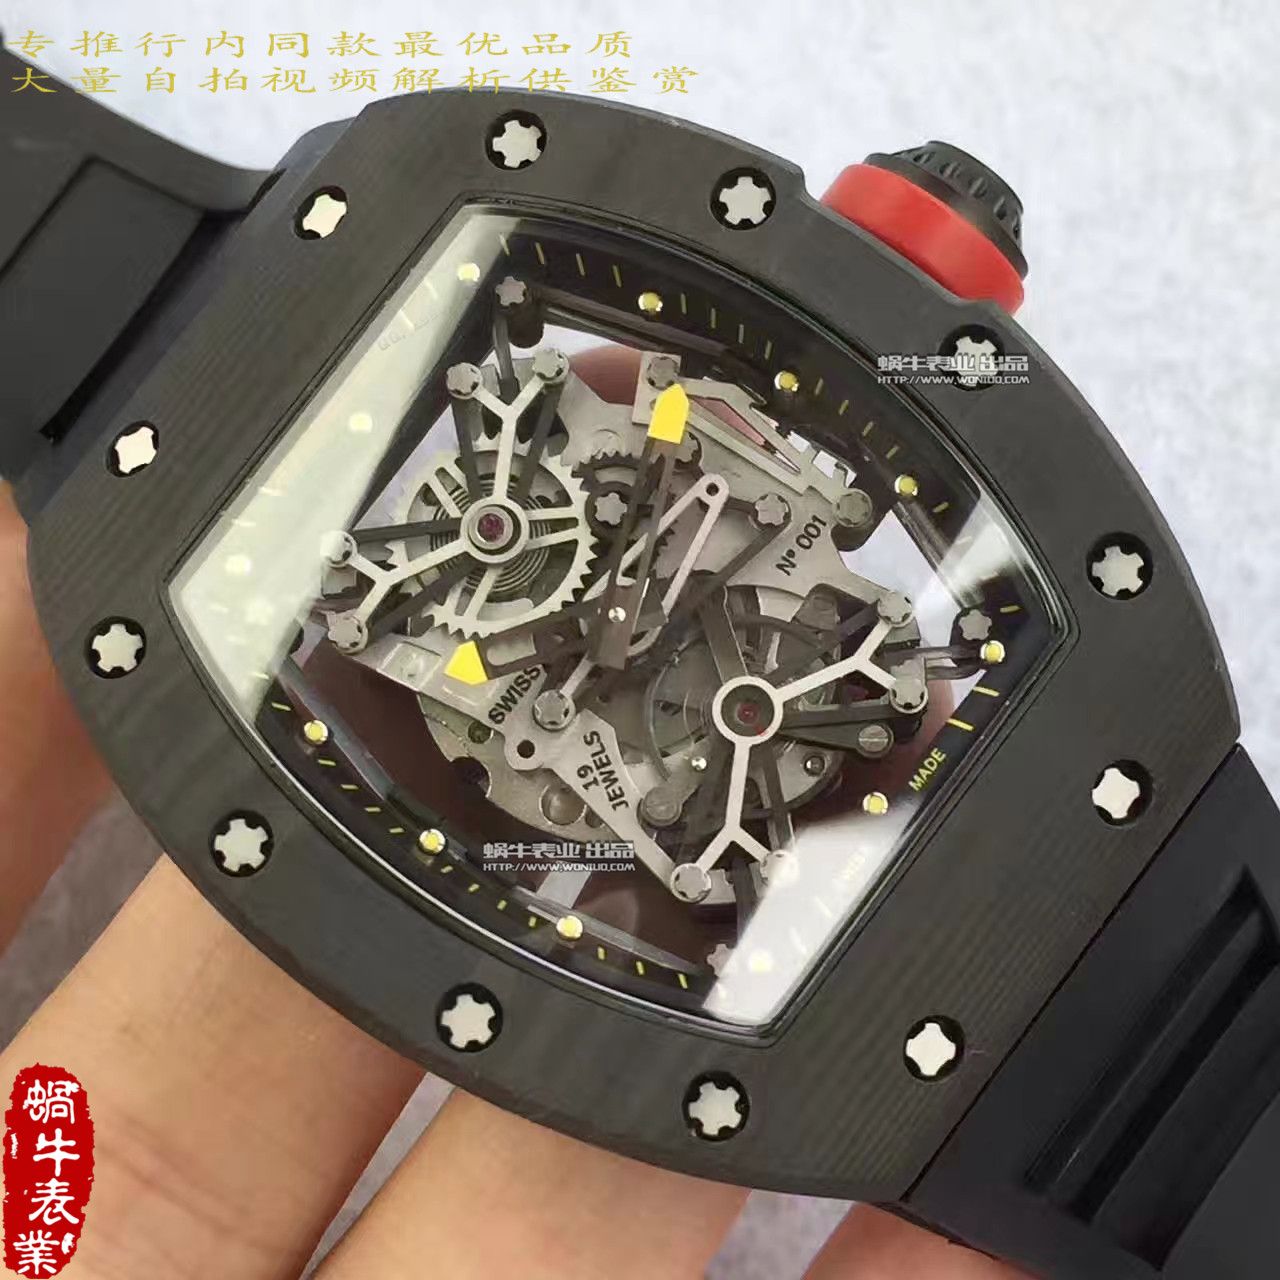 【RM厂一比一精仿手表】里查德米尔男士系列RM 50-27-01 NTPT腕表 